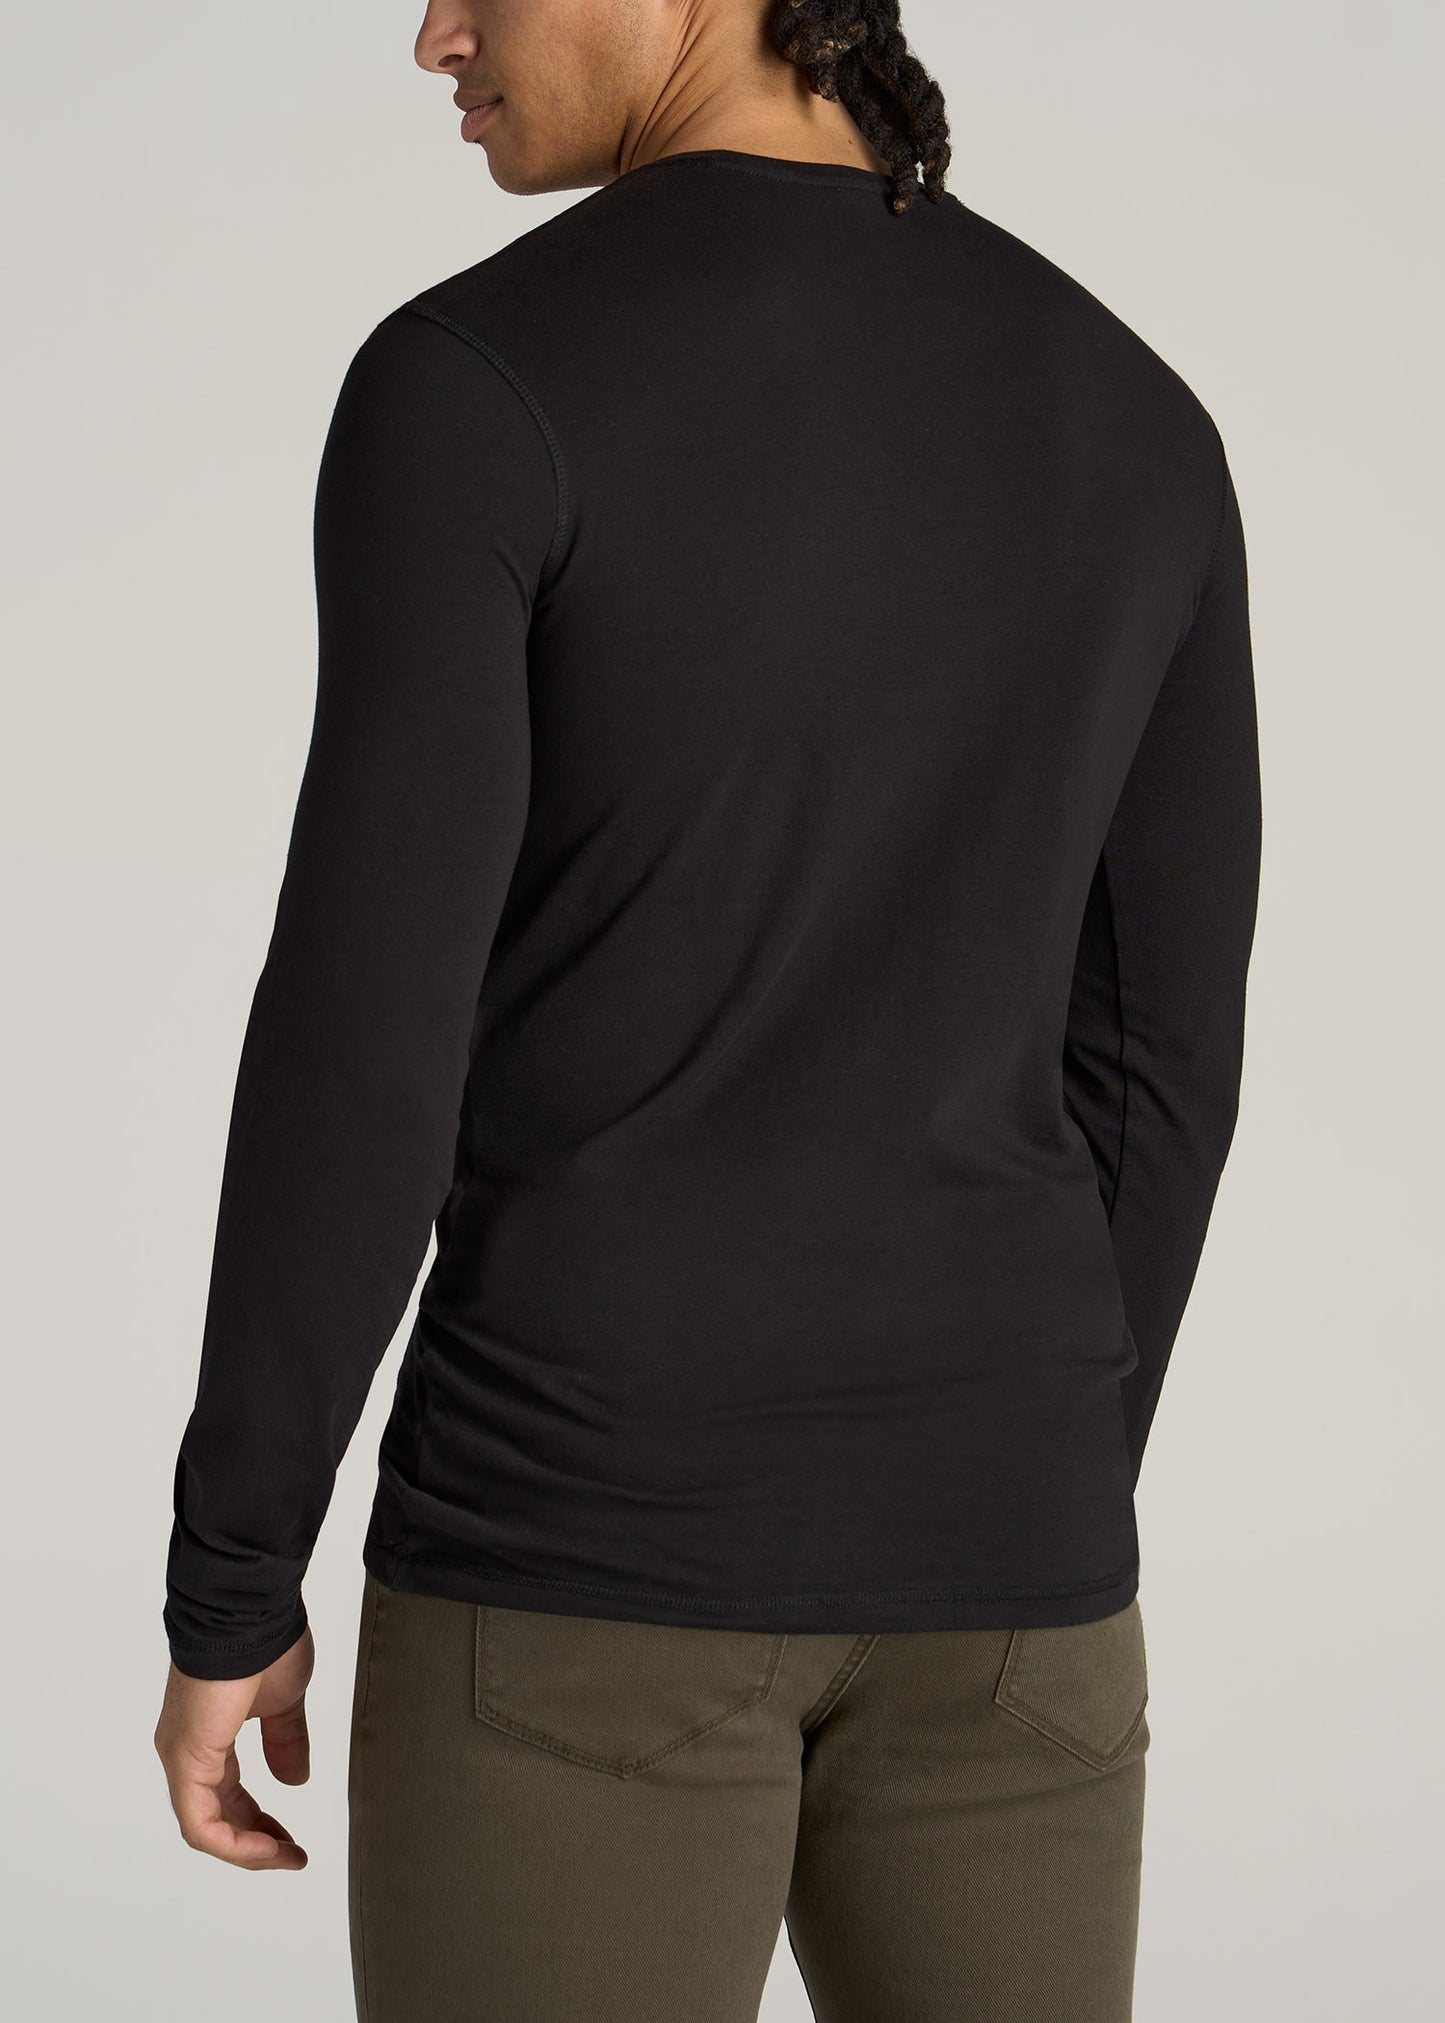 The Essential Slim-Fit Crewneck Men's Tall Tees in Black S / Tall / Black